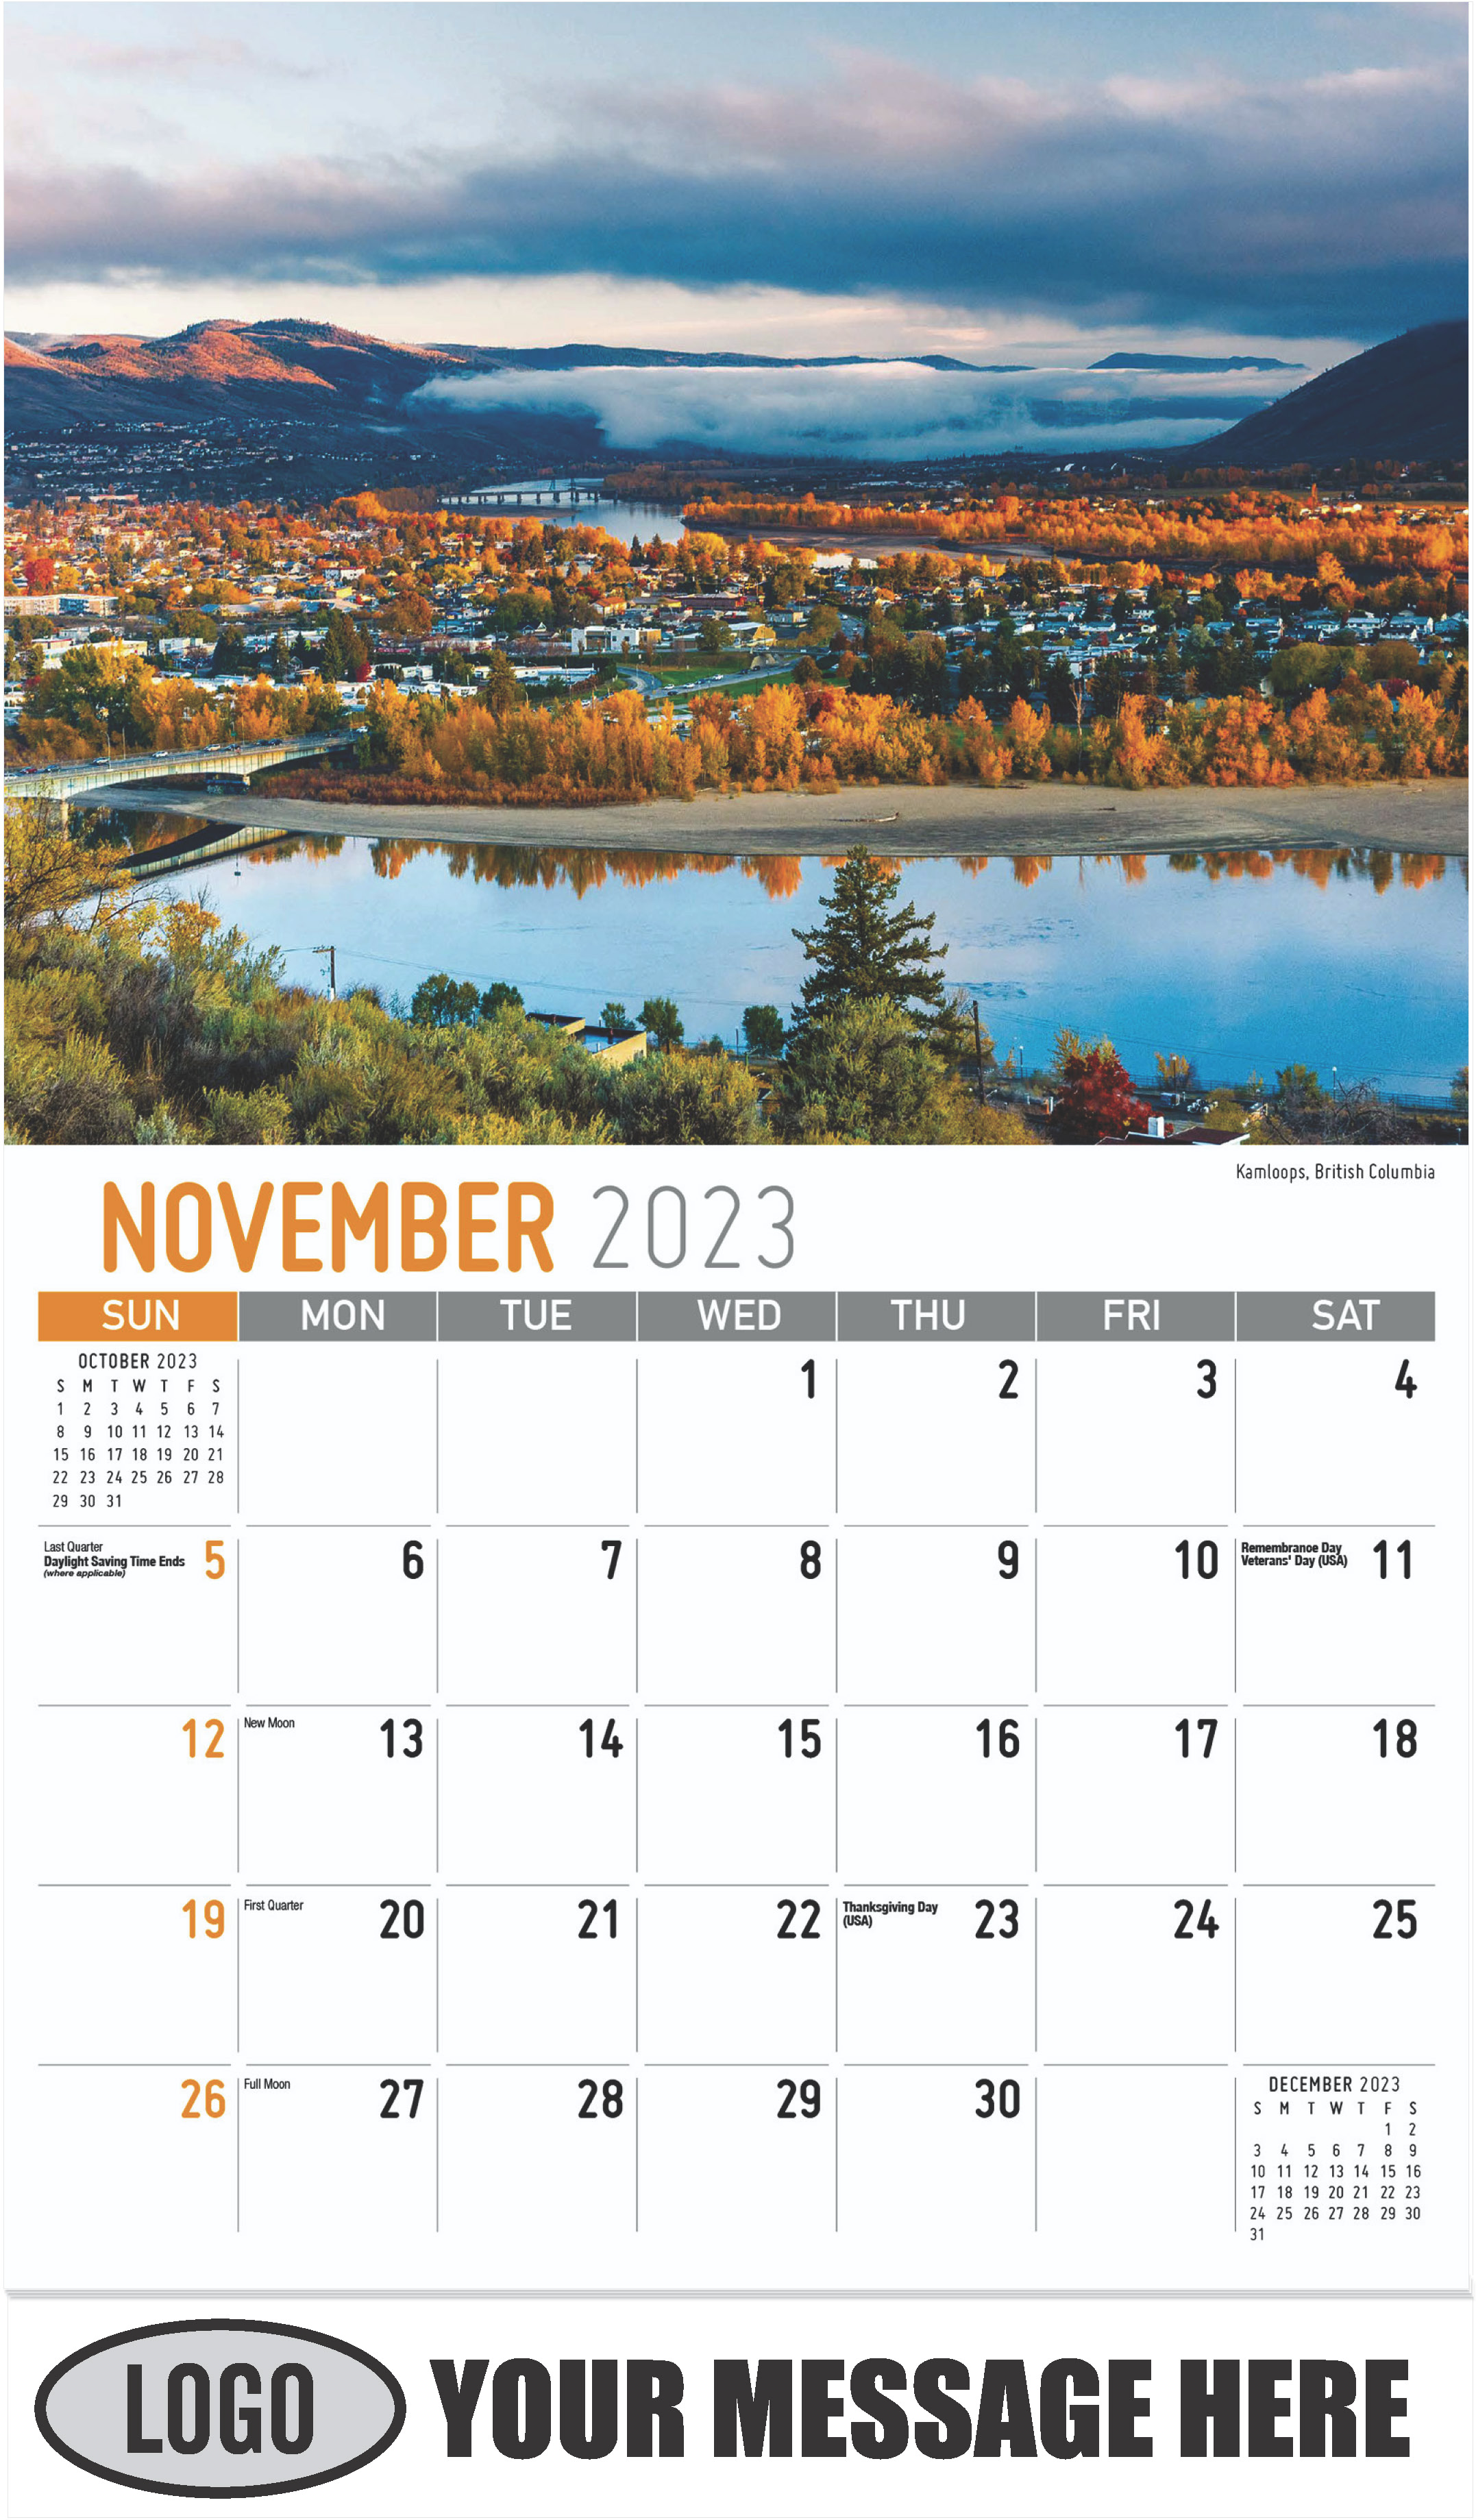 Kamloops, British Columbia - November - Scenes of Western Canada 2023 Promotional Calendar